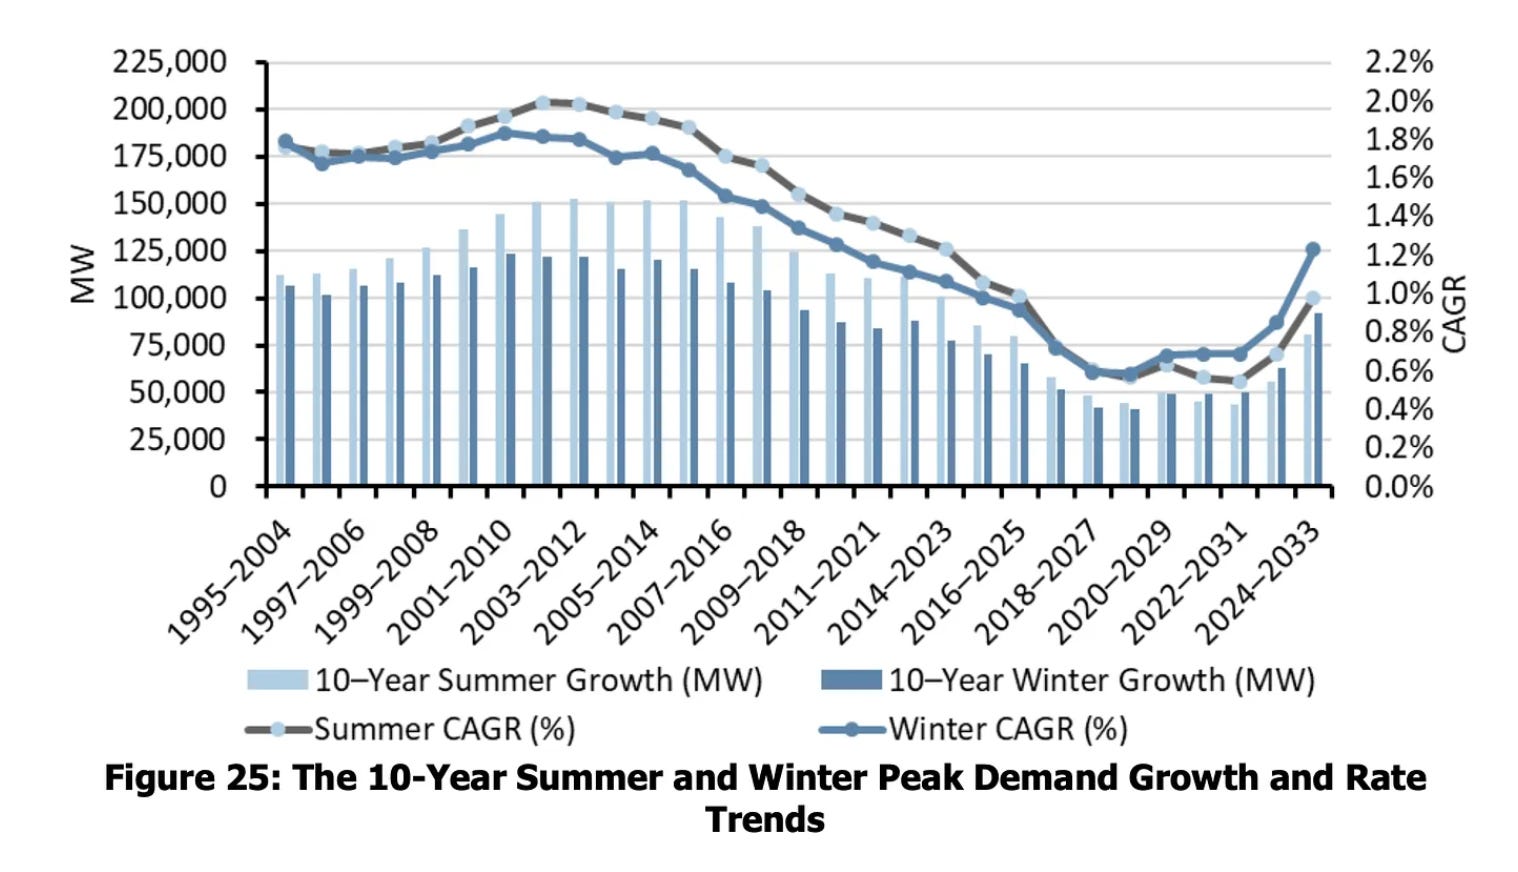 10-Year Summer and Winter Peak Demand Growth